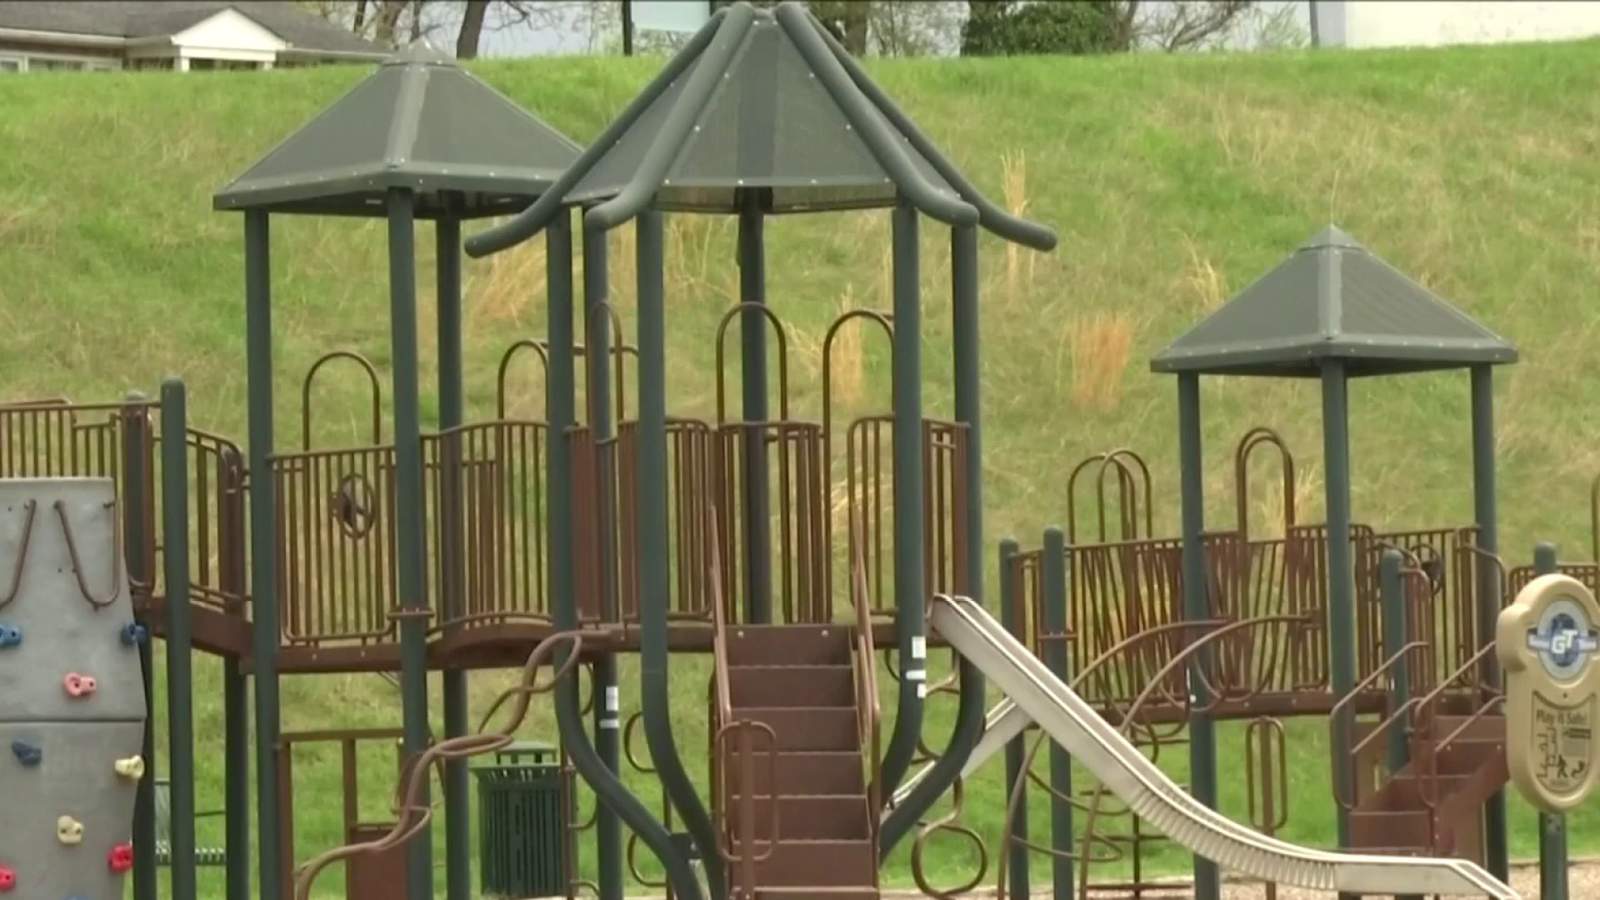 Lynchburg Parks & Rec asks for input on public park renovation